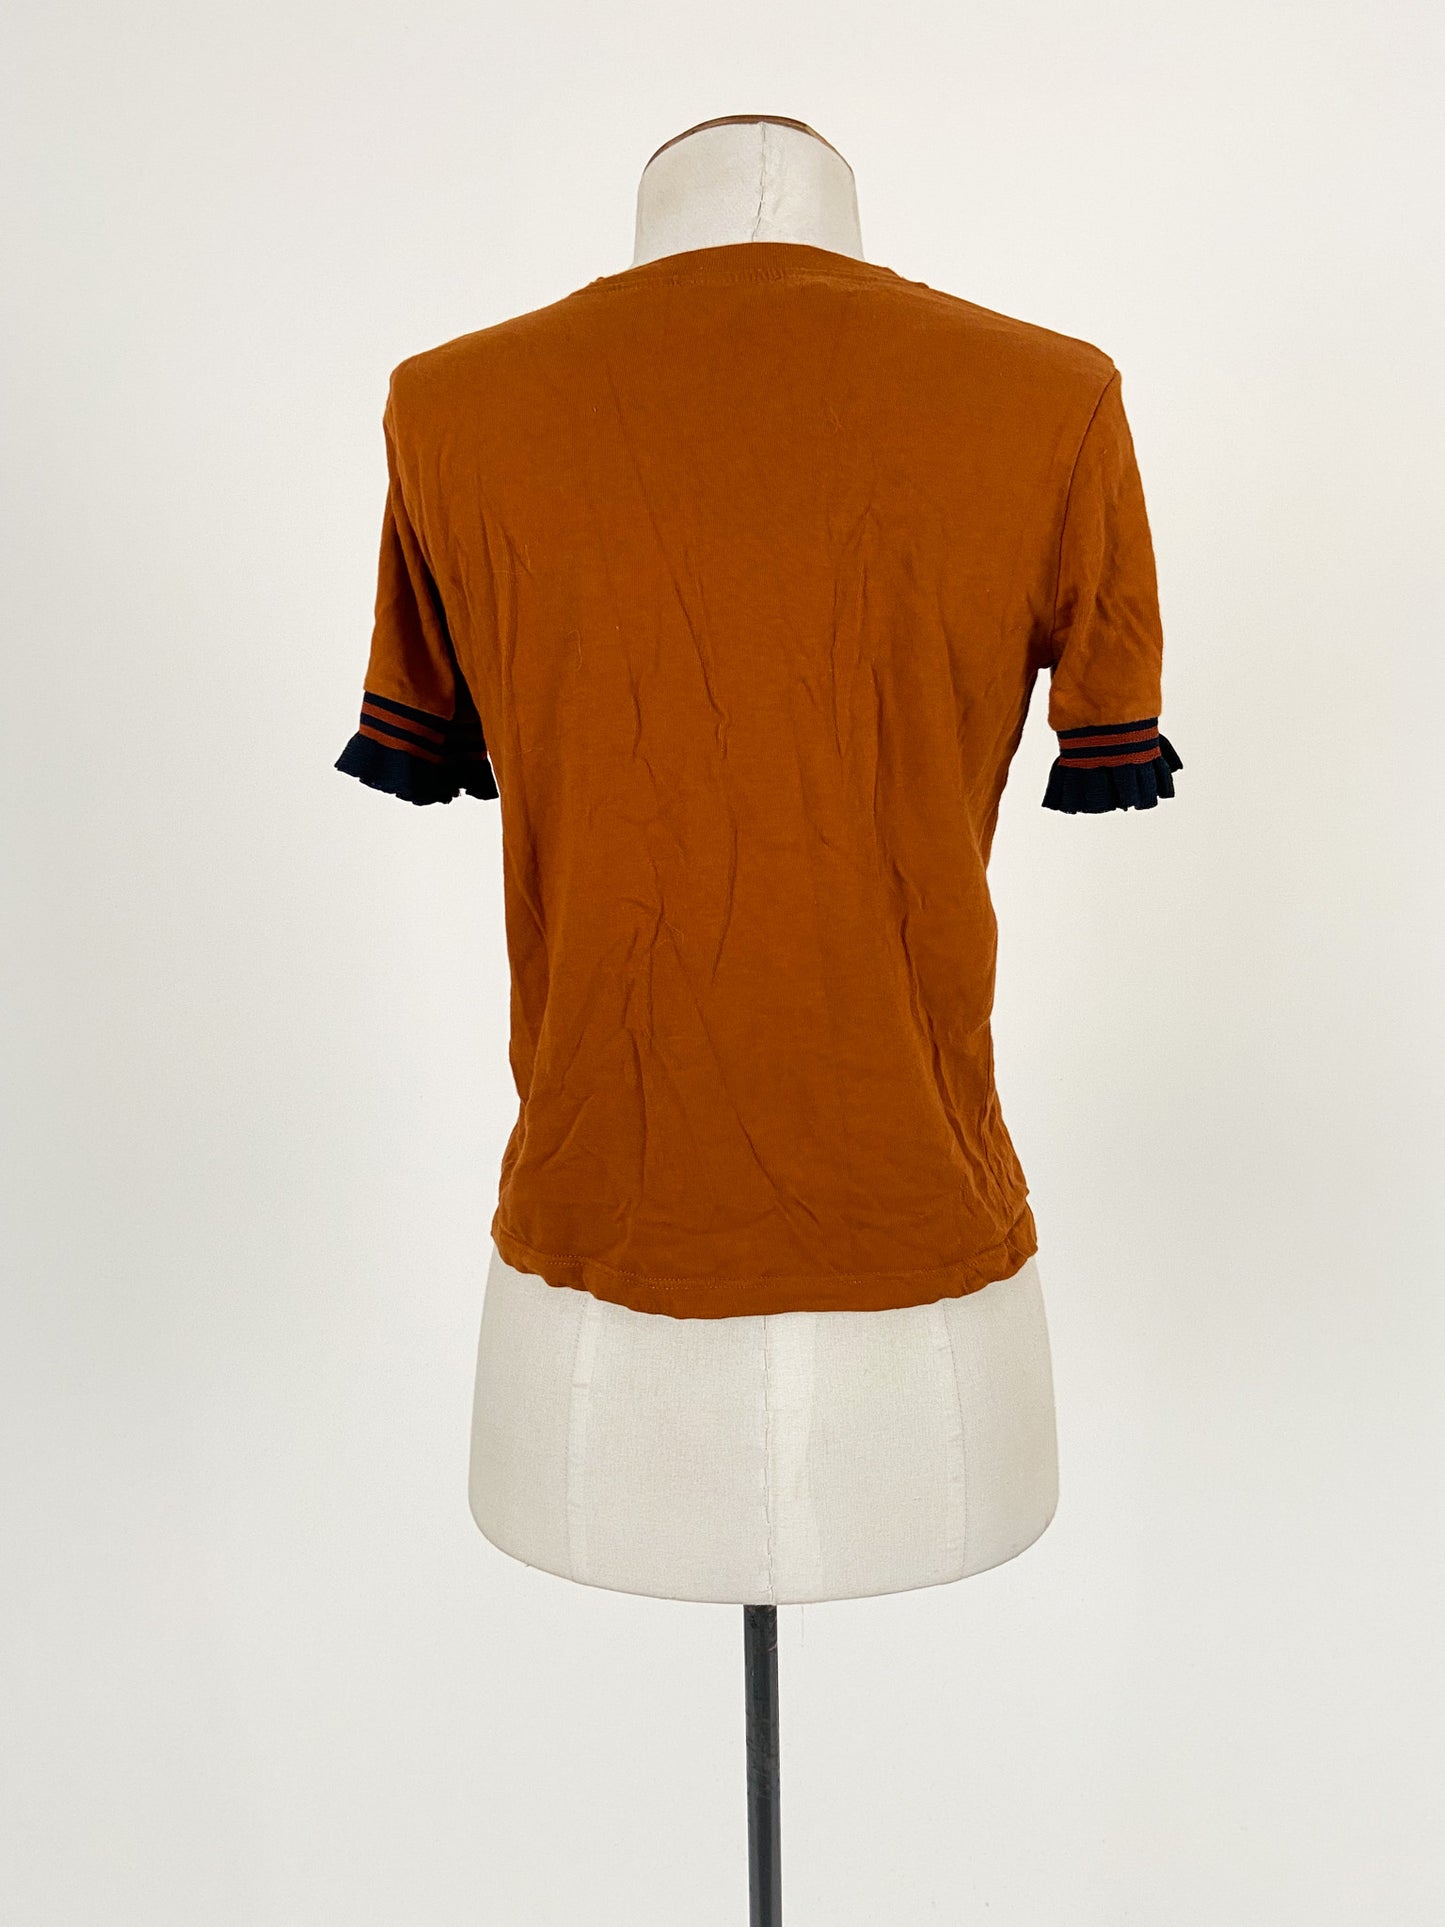 Zara | Orange Casual/Workwear Top | Size S